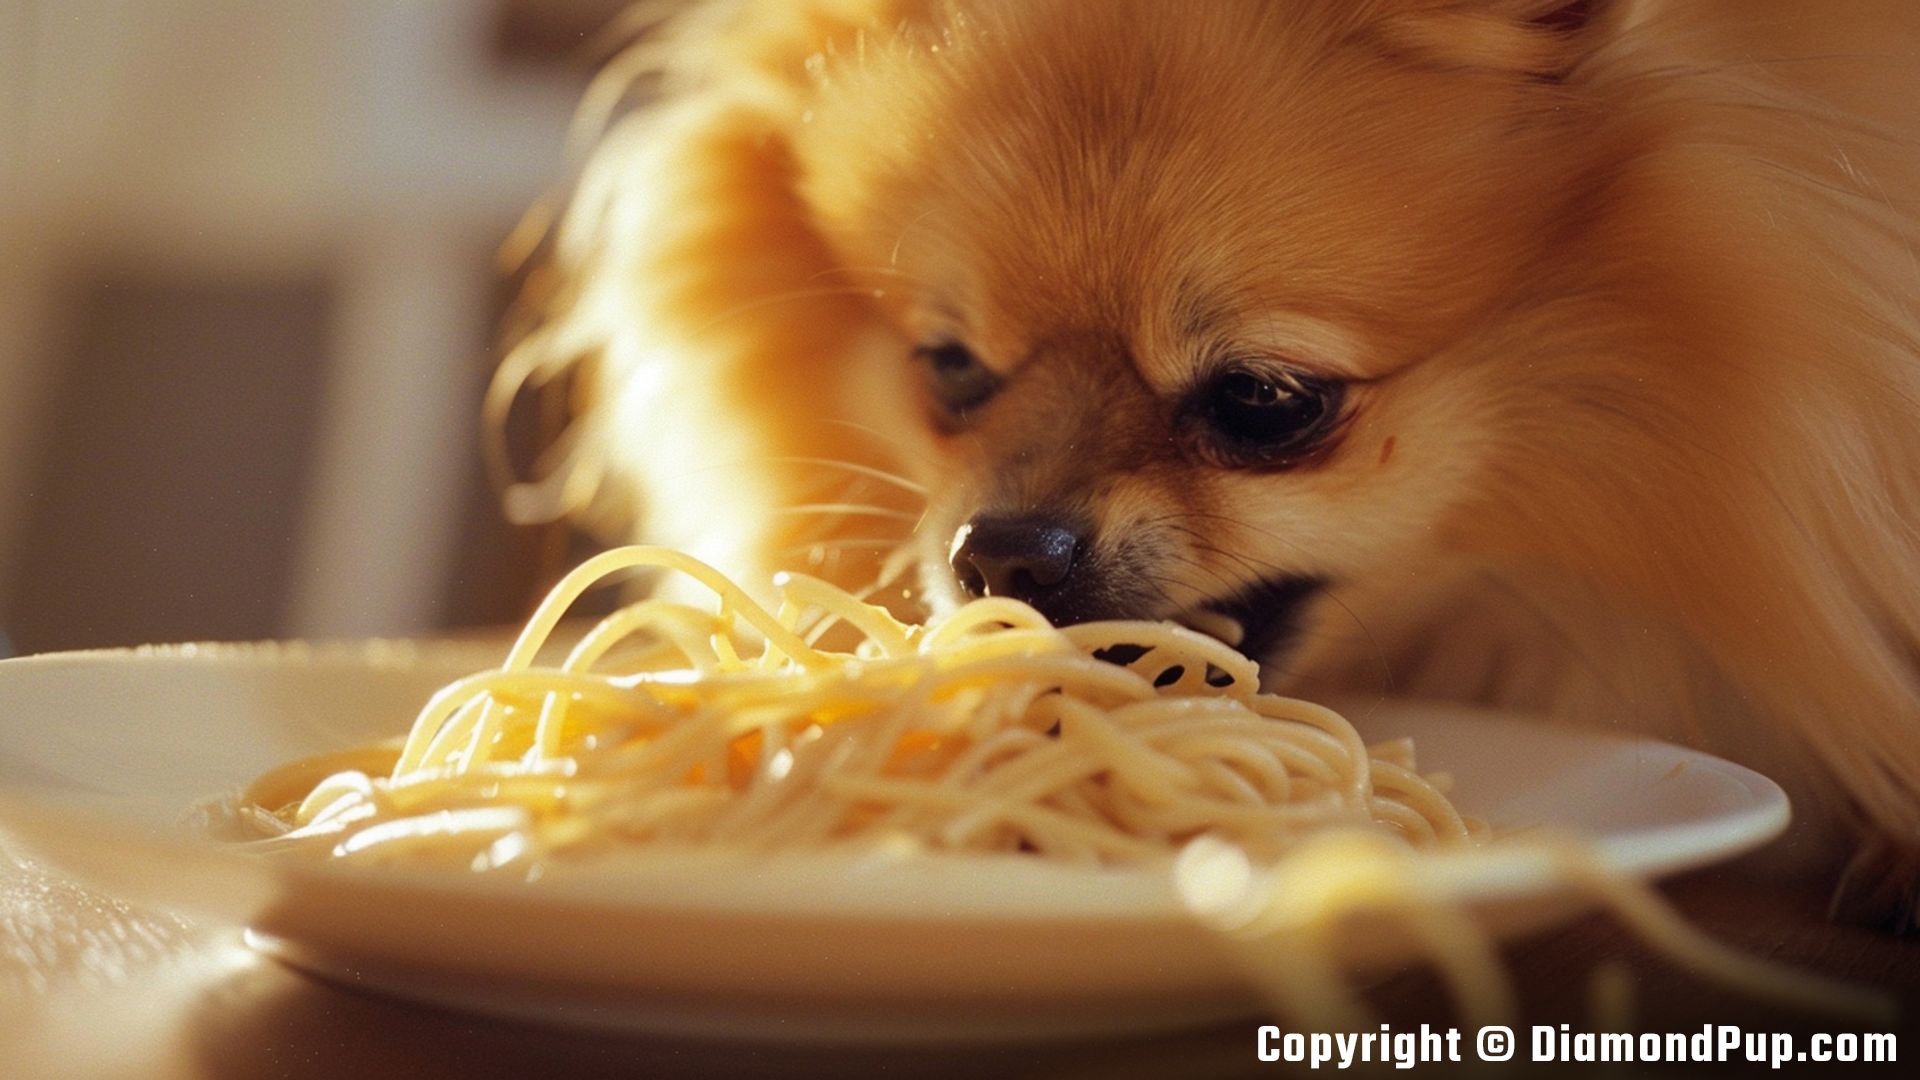 Image of a Playful Pomeranian Snacking on Pasta